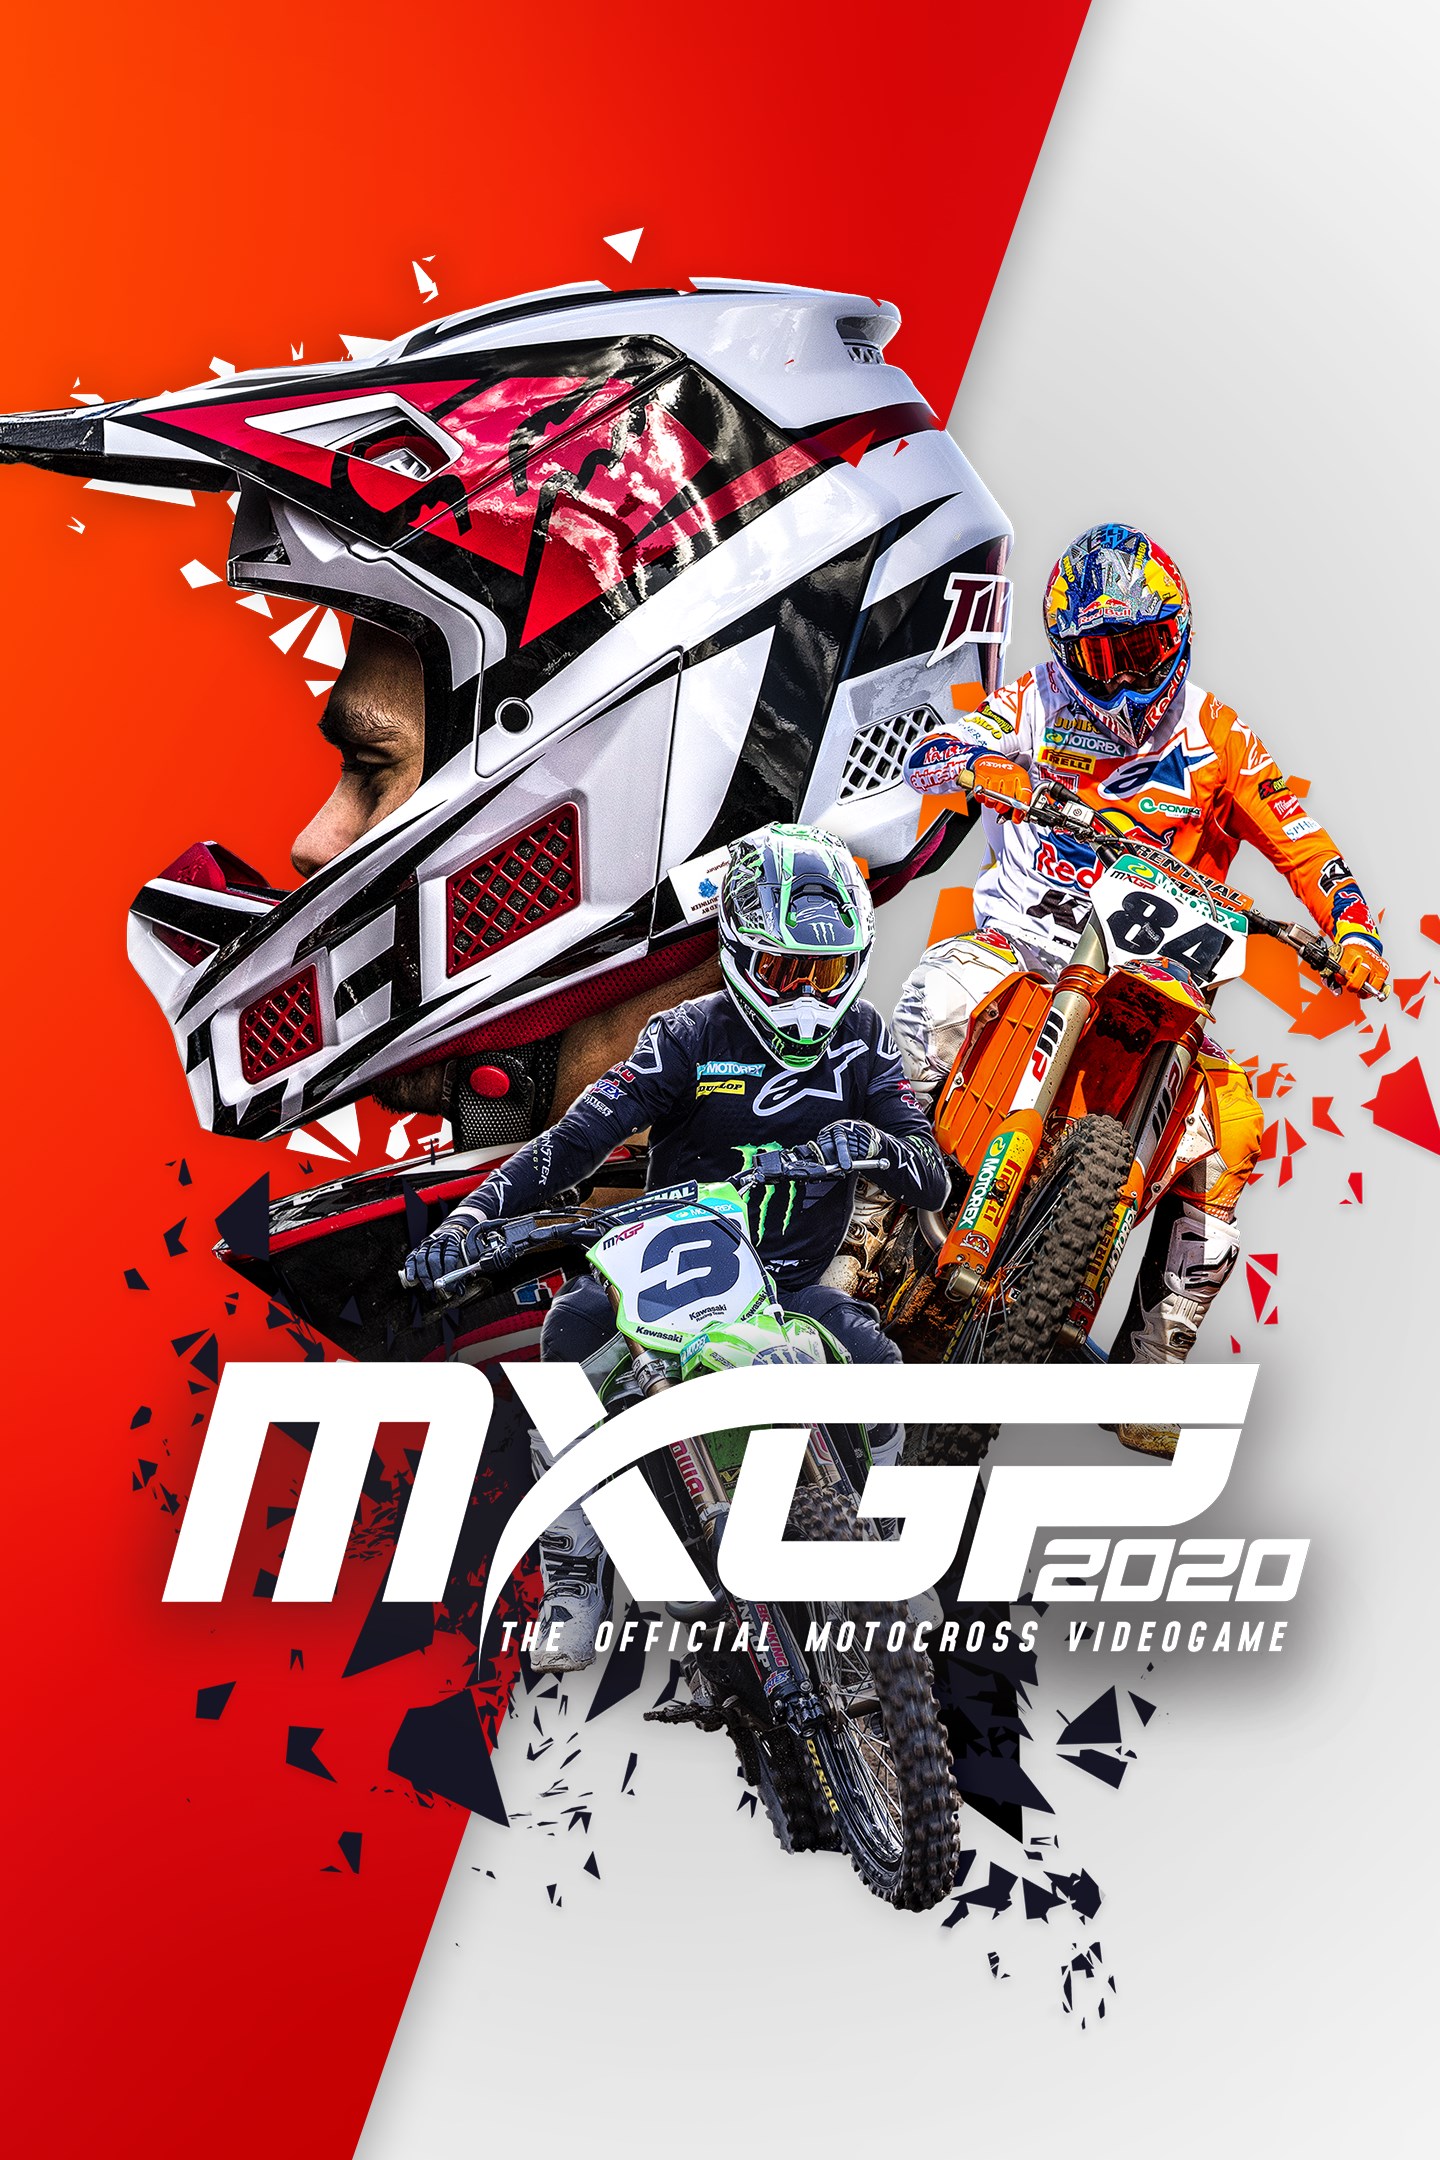 mxgp 2019 digital download xbox one